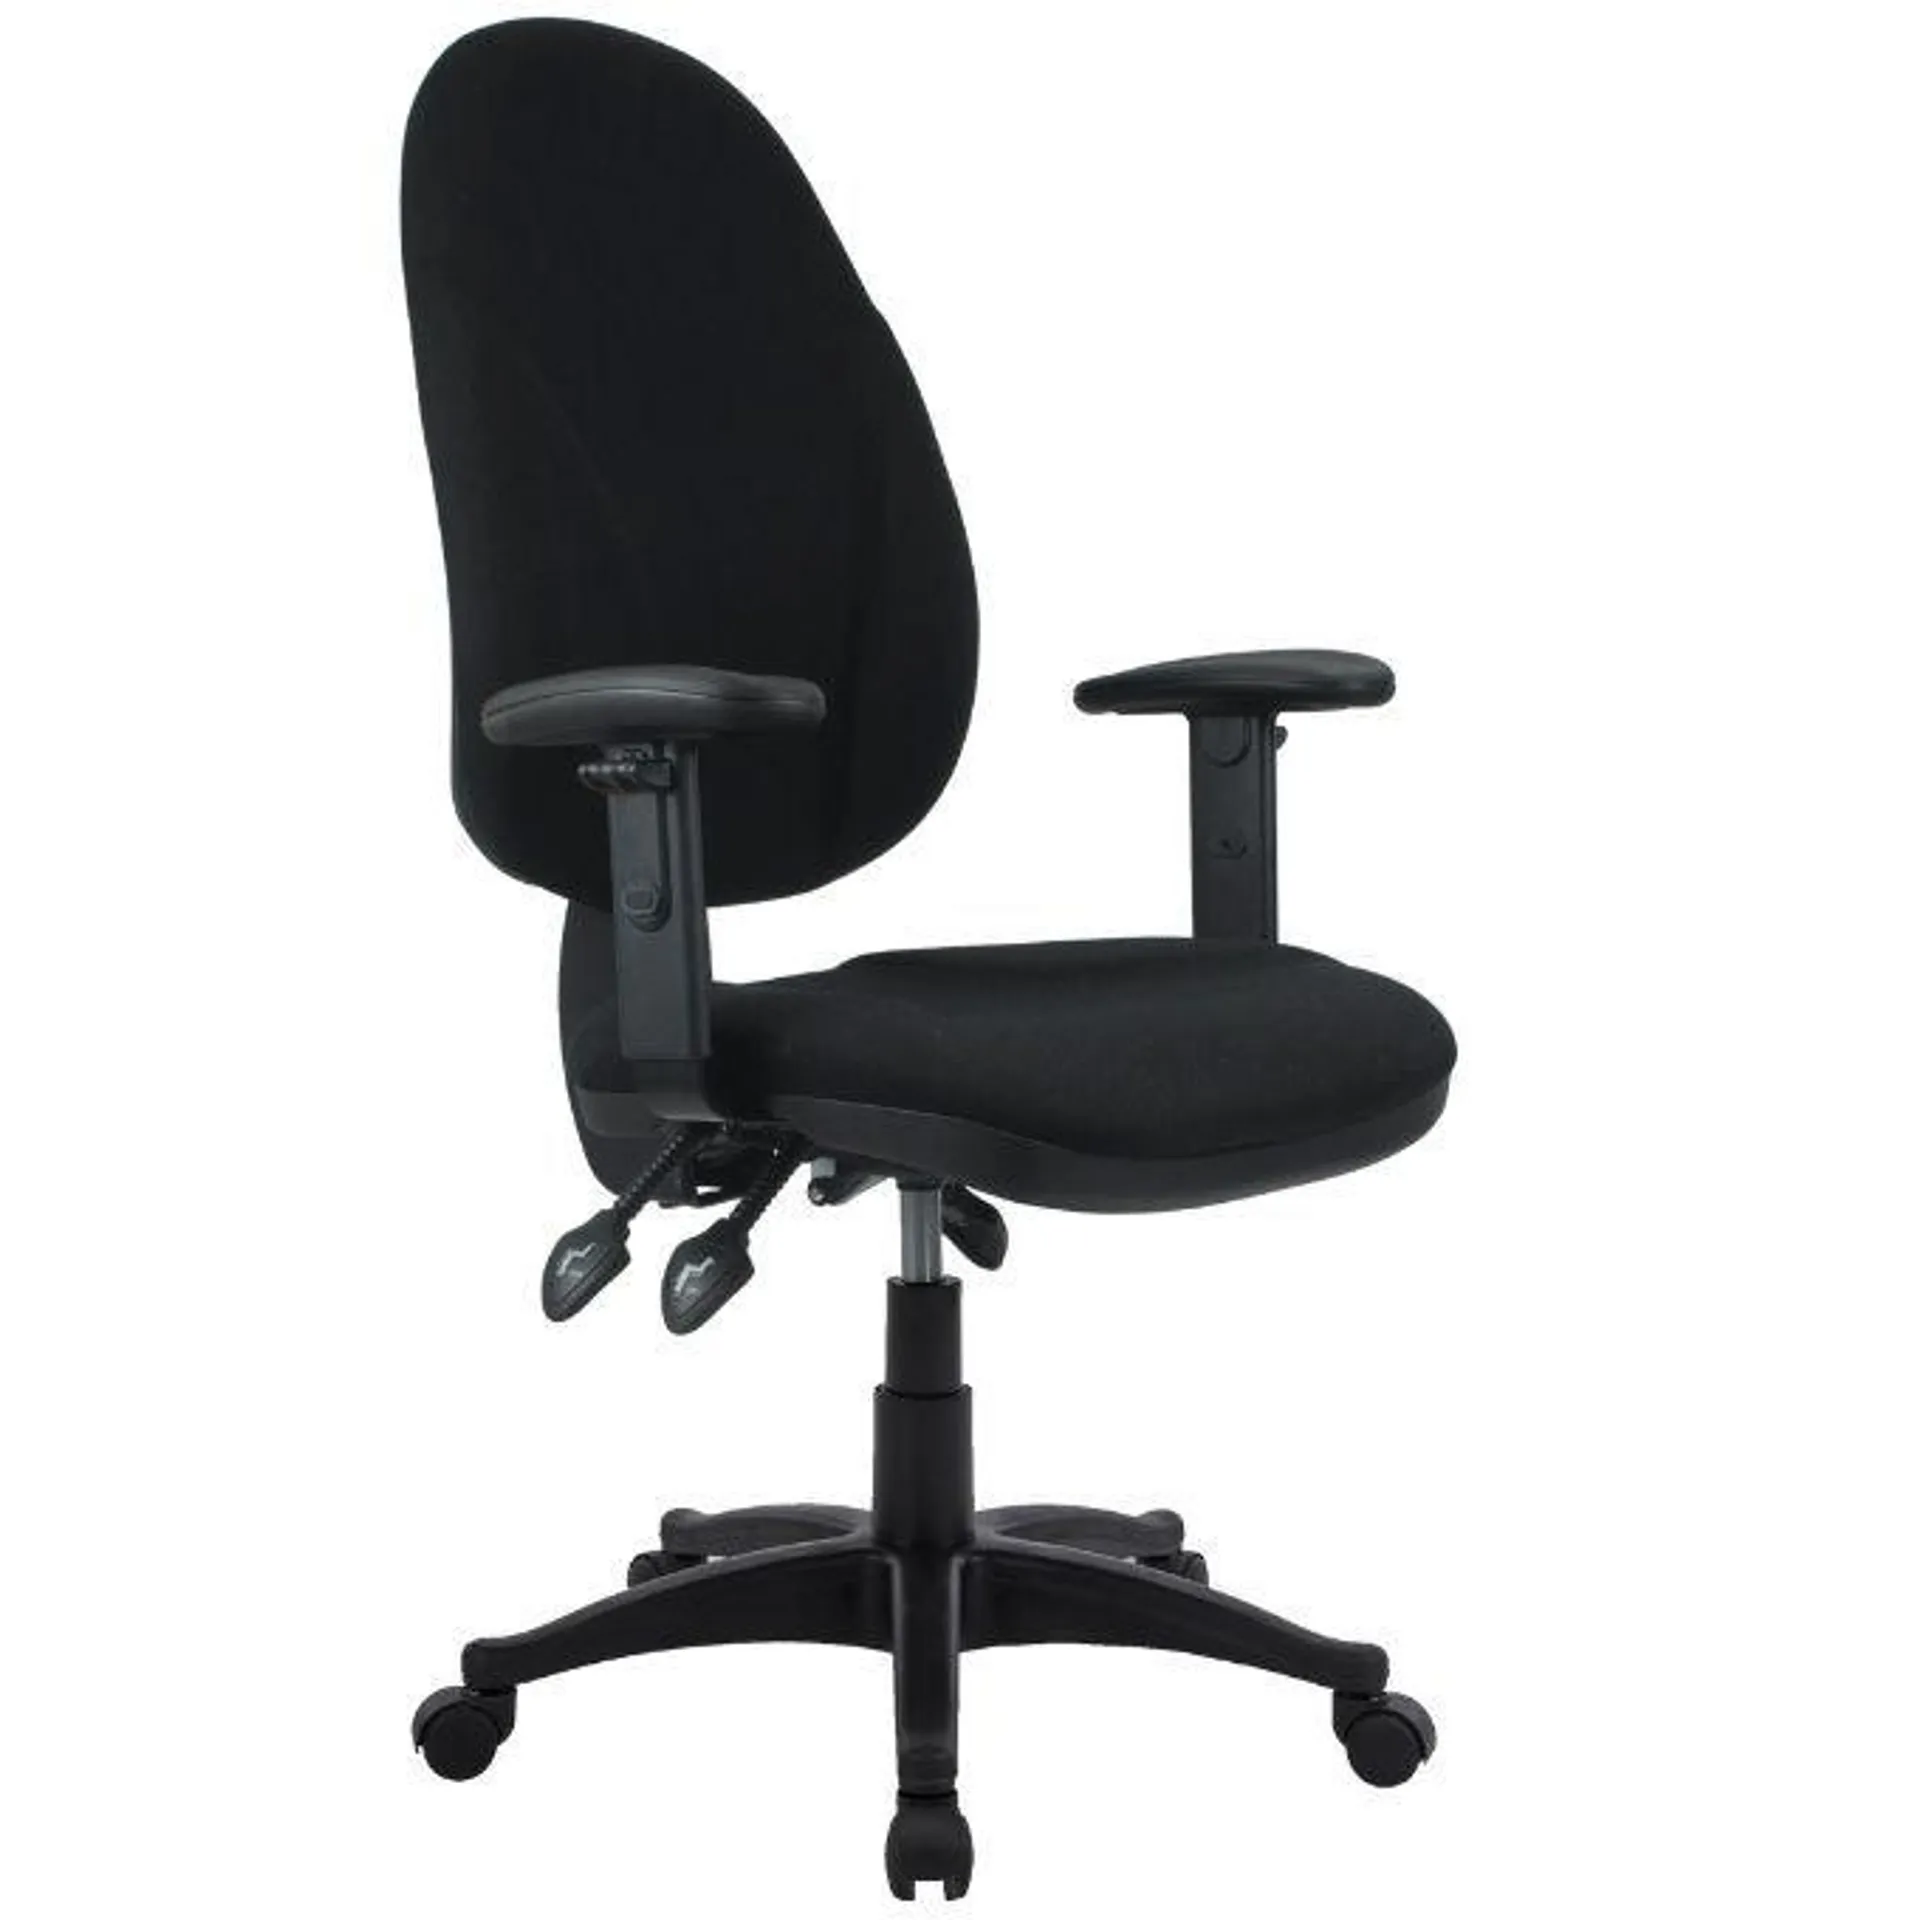 Everfurn Ergo High Back Office Chair: Mammoth Series